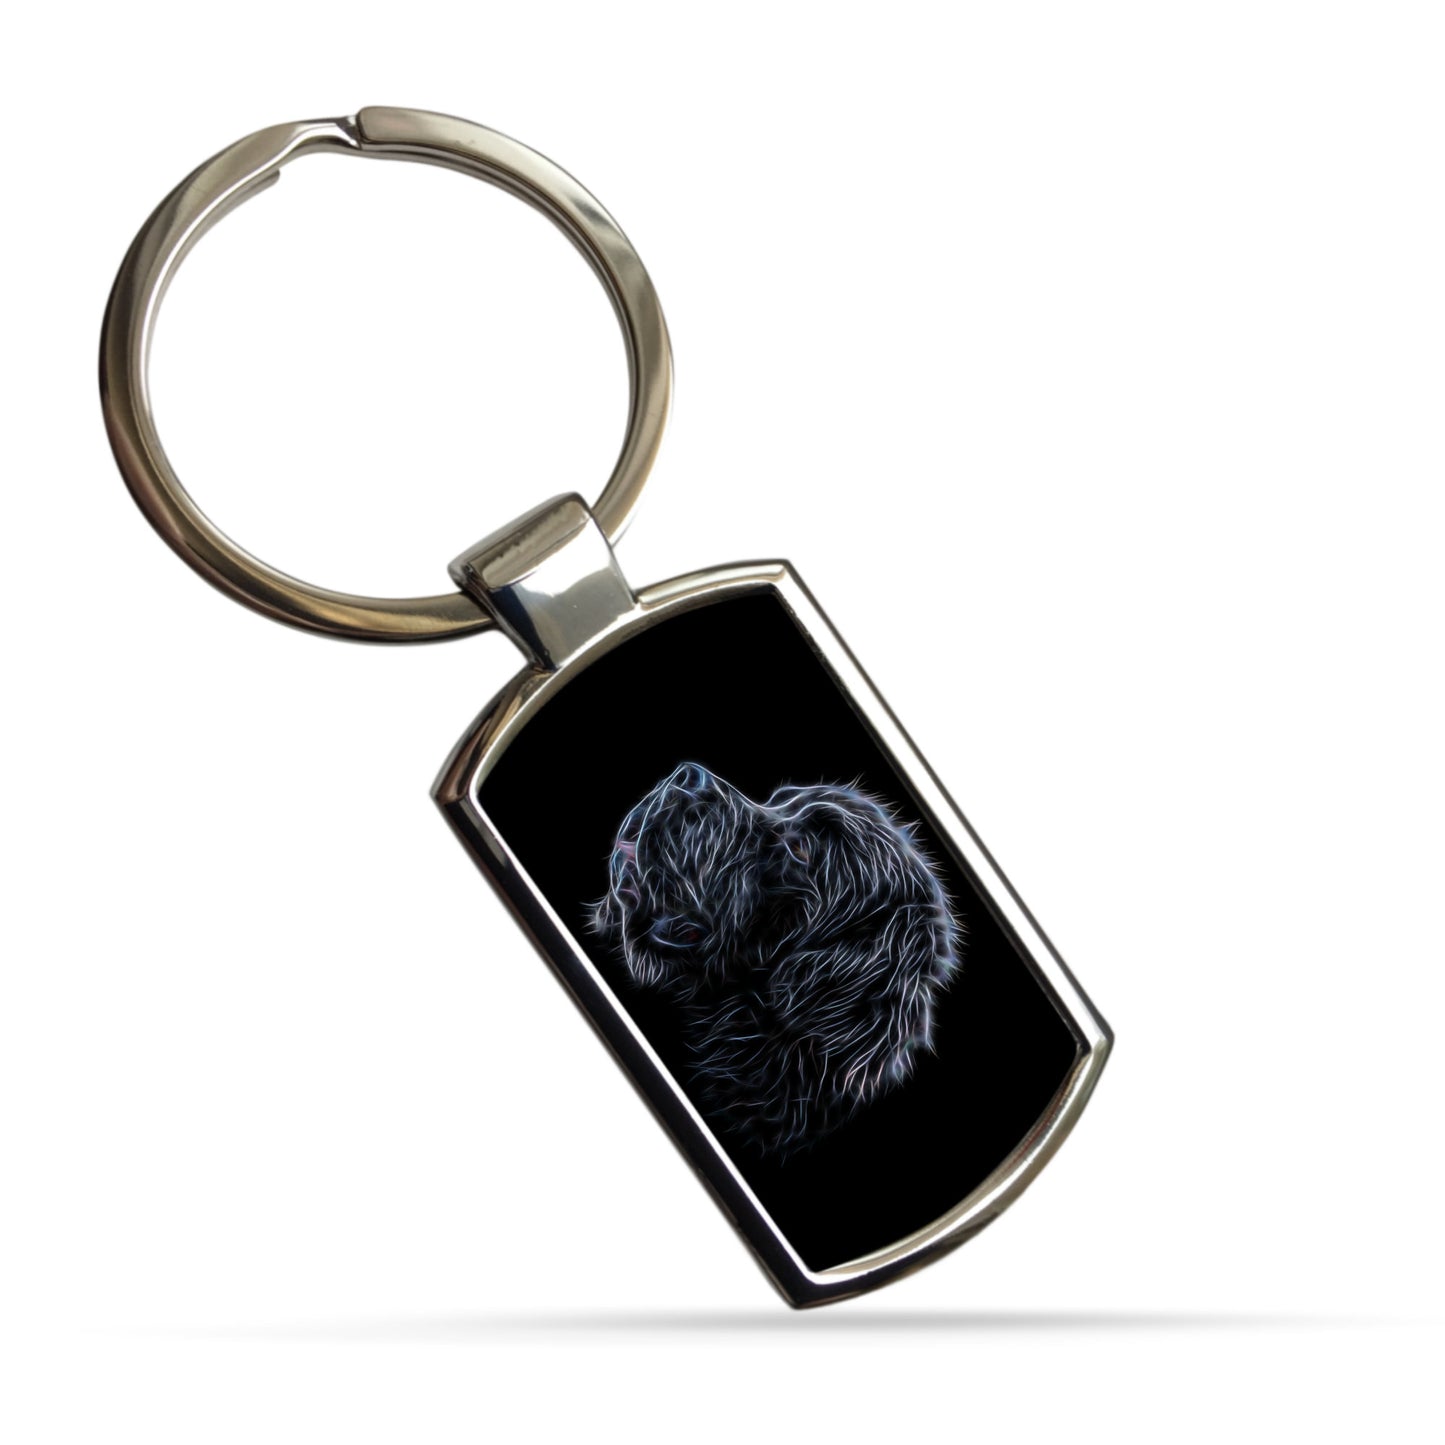 Black Newfoundland Dog Keychain with Fractal Art Design